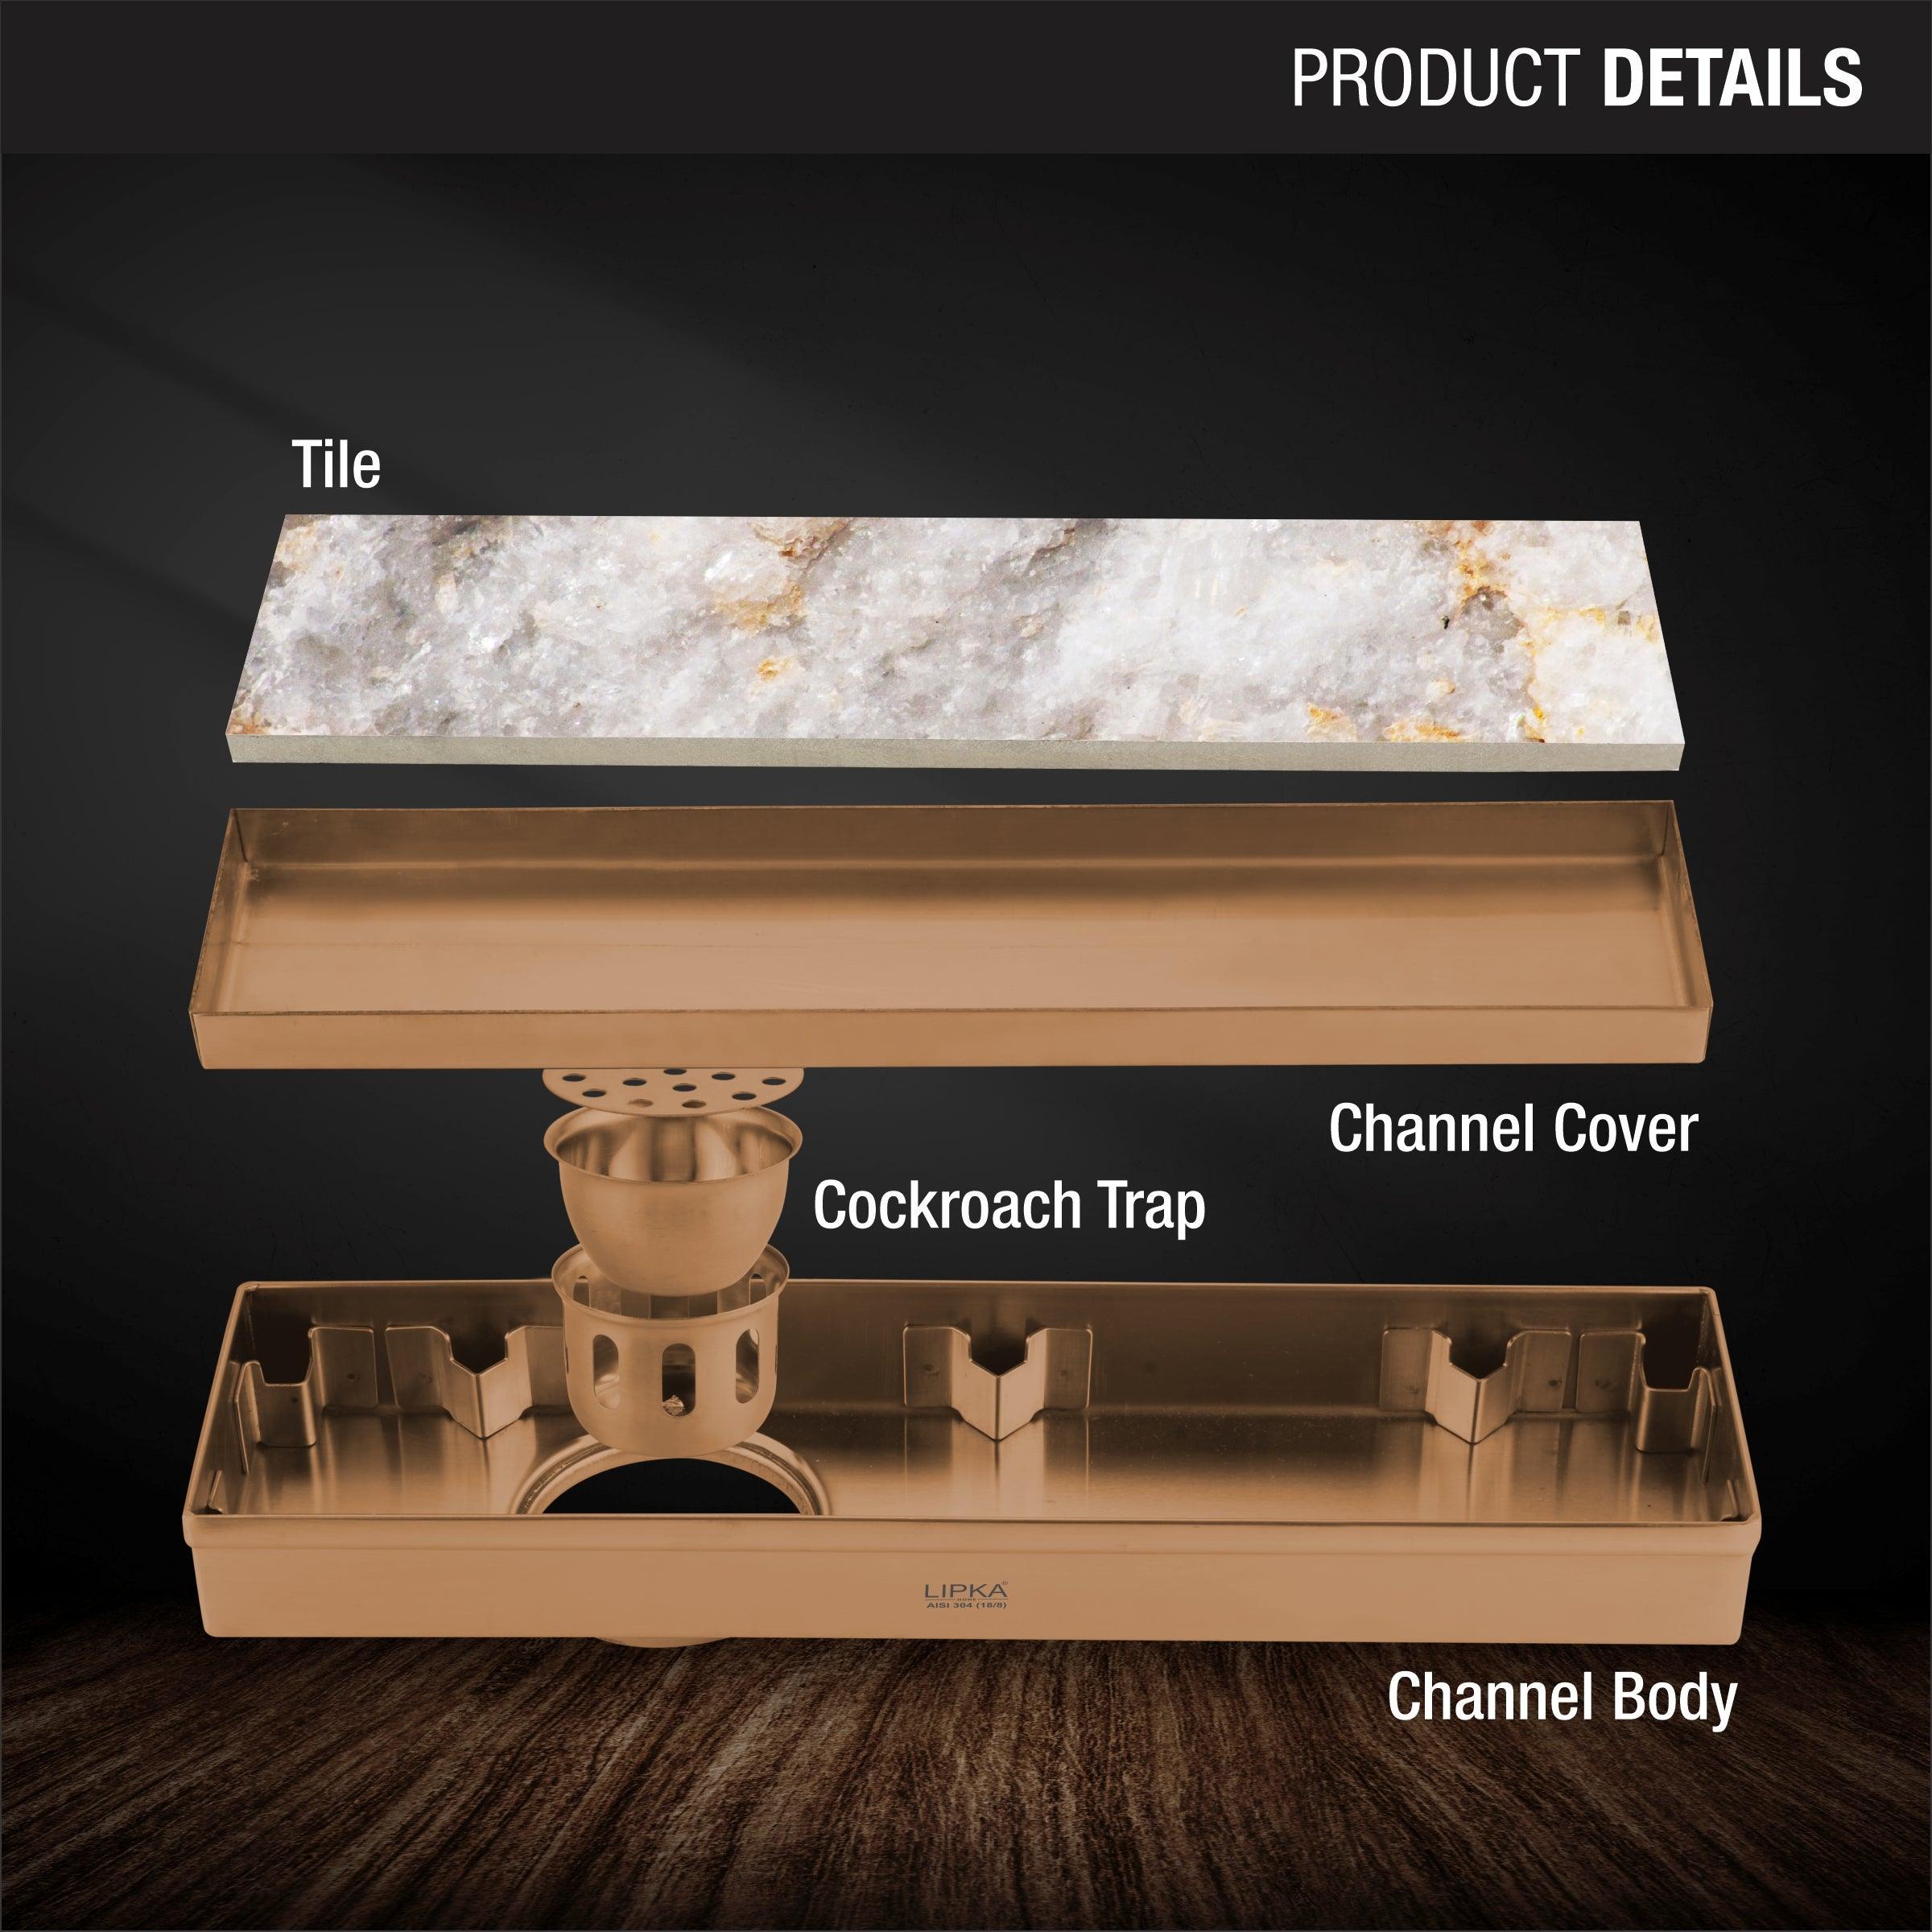 Tile Insert Shower Drain Channel - Antique Copper (18 x 3 Inches) product details